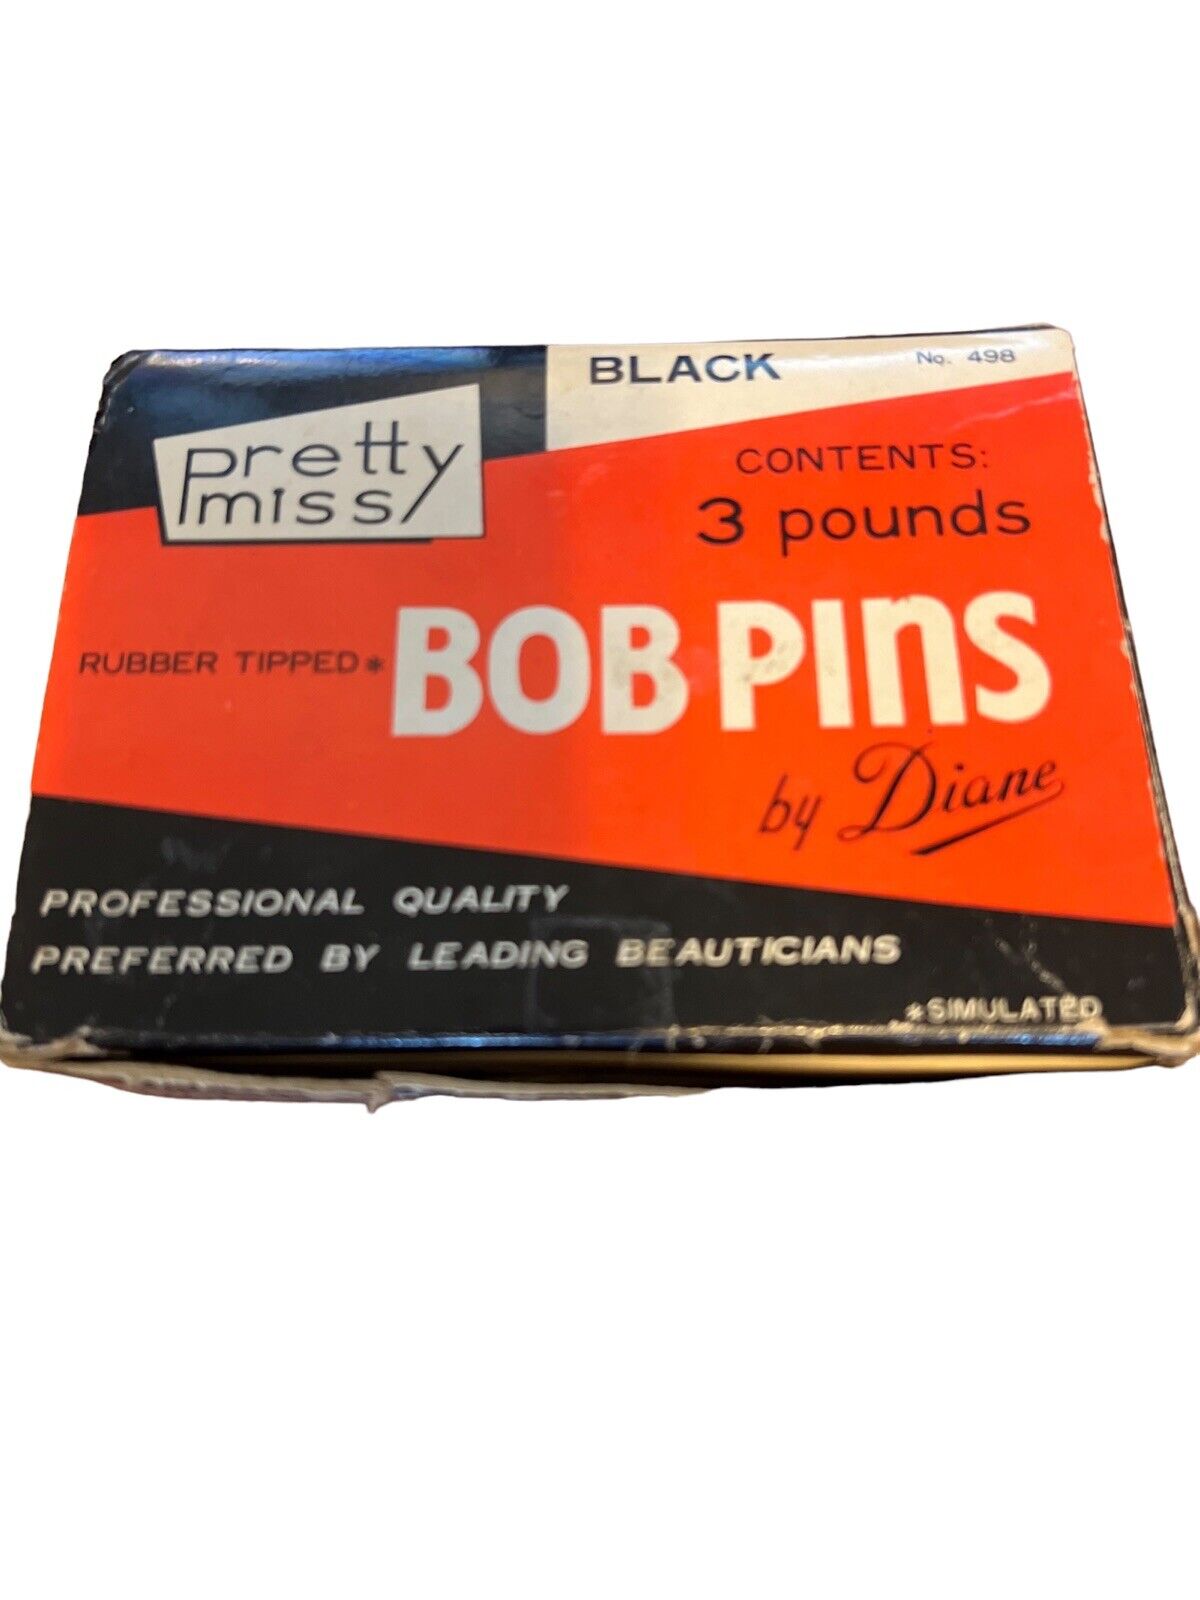 Vintage Pretty Miss Bob Pins- Rubber Tipped Black hair pins #498 Open Box Japan